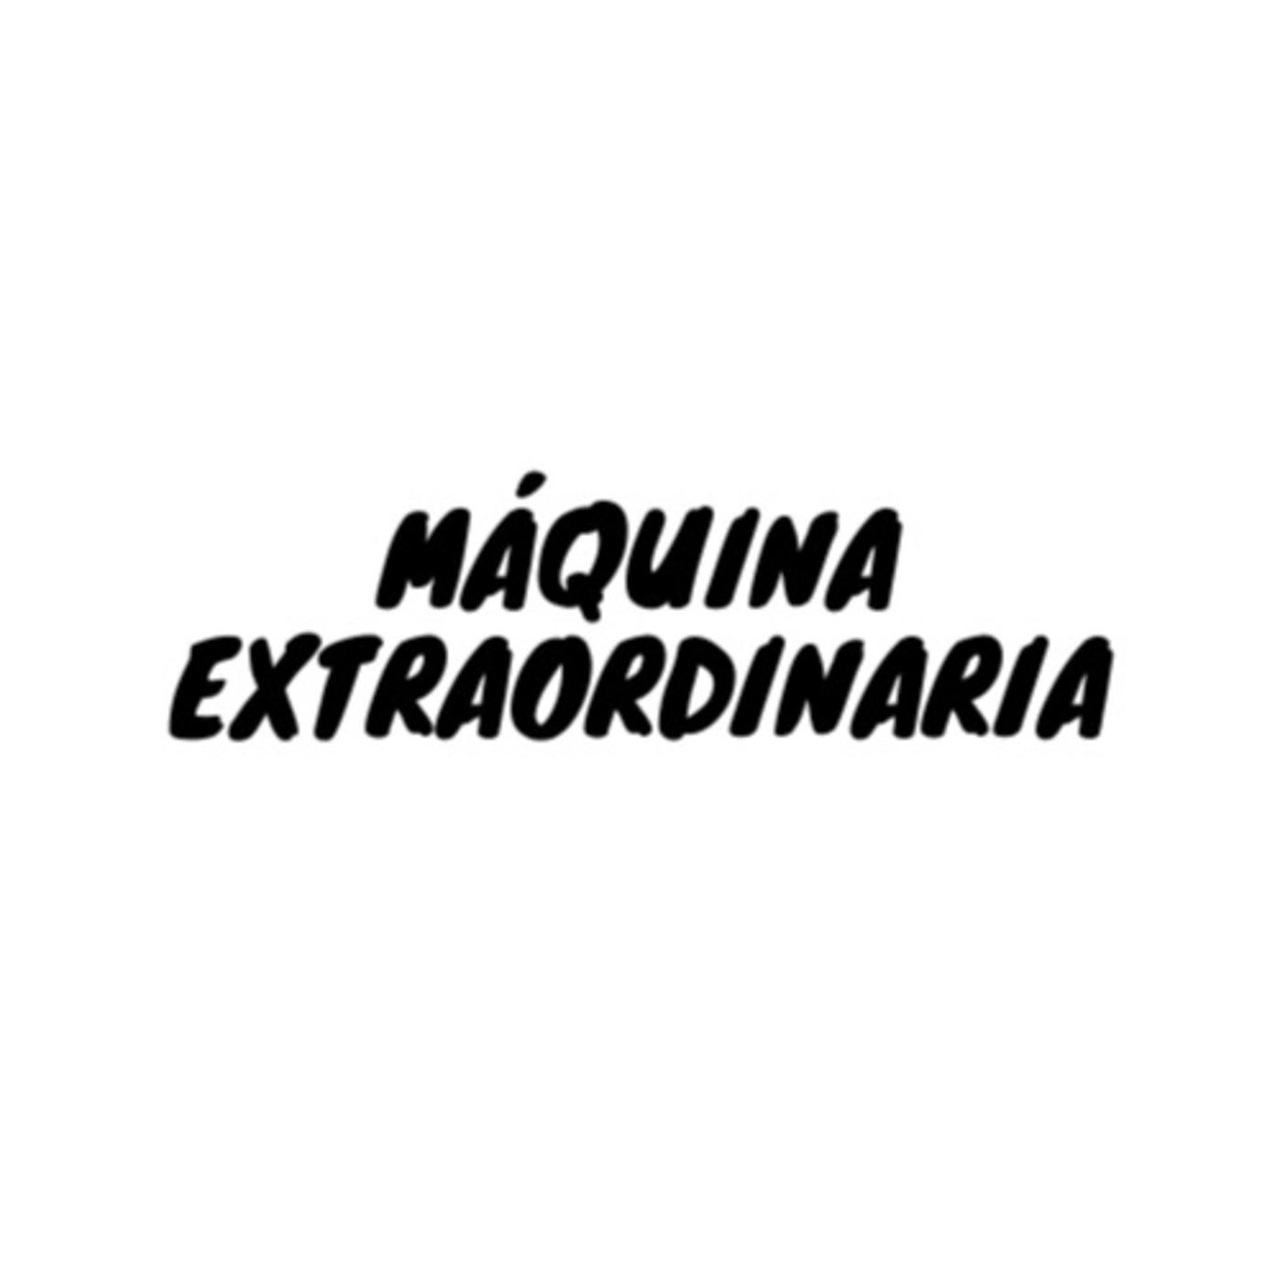 Artwork for Máquina Extraordinaria